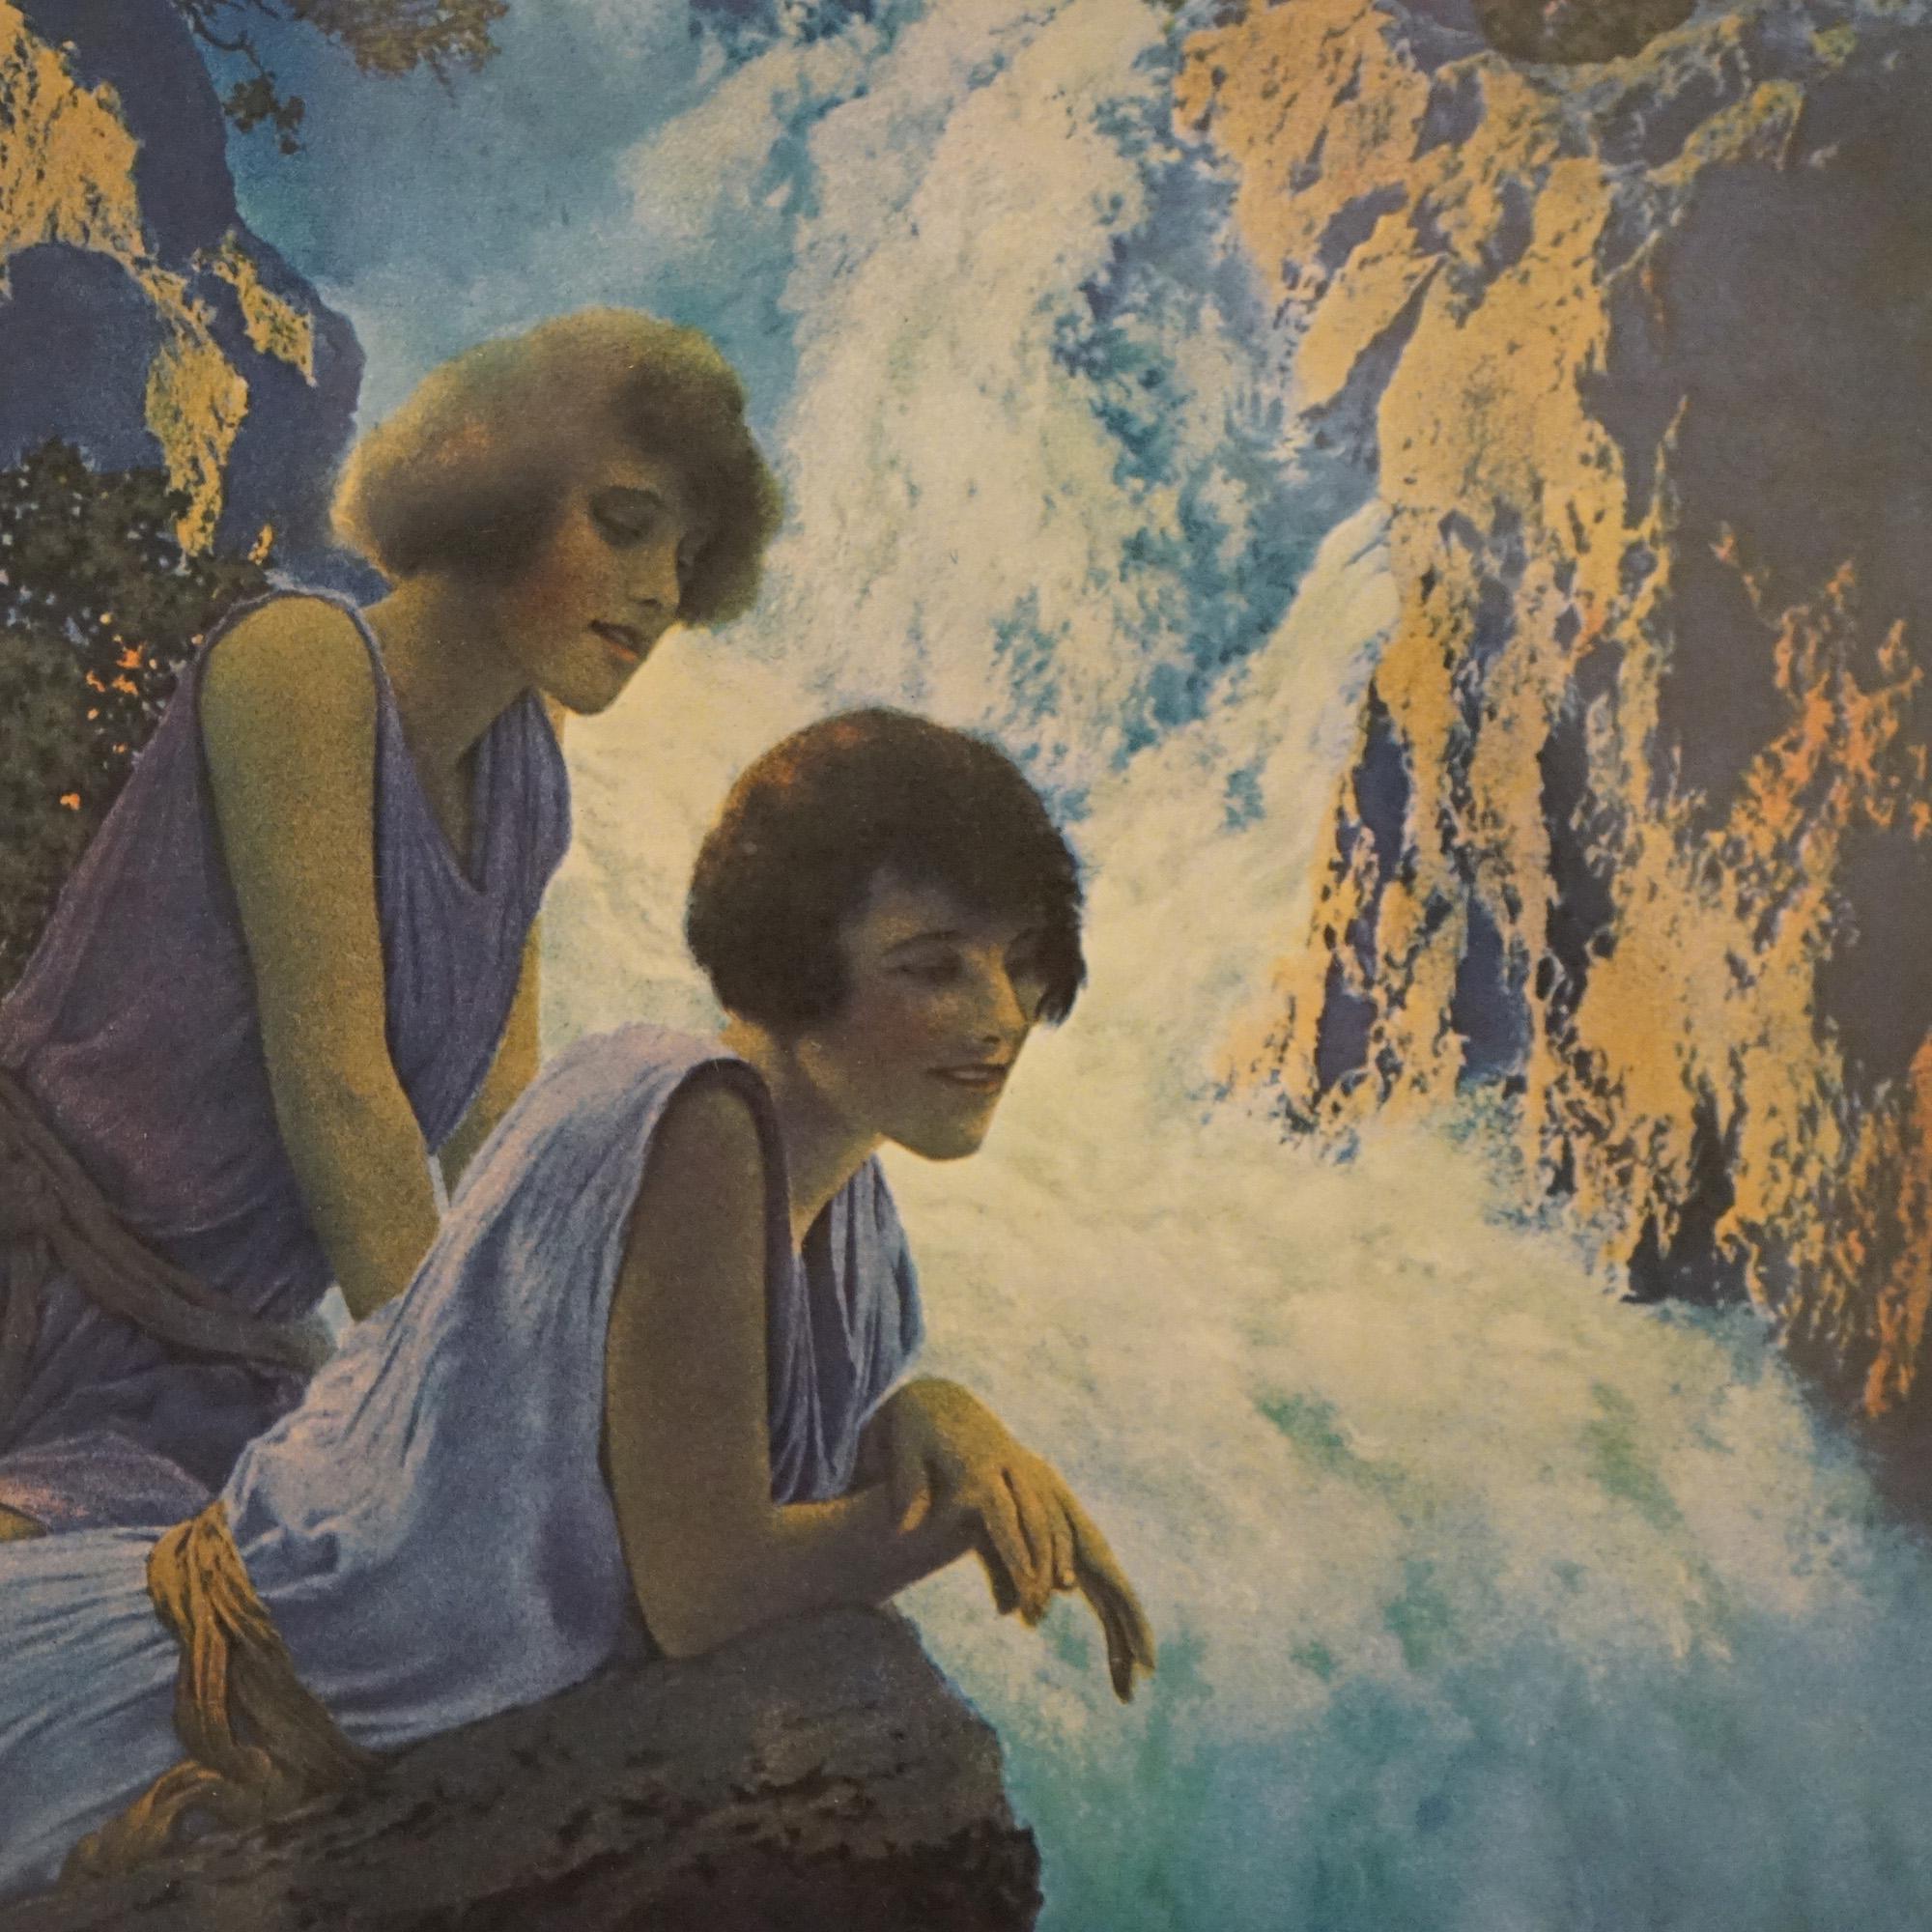 Art Deco Maxfield Parrish “Waterfall” Edison Mazda Calendar Top Print, Framed, C1970

Measures - 32.75